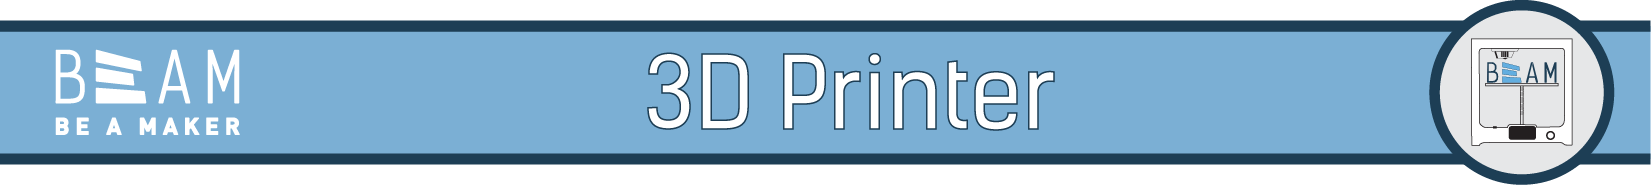 3D Printer Banner